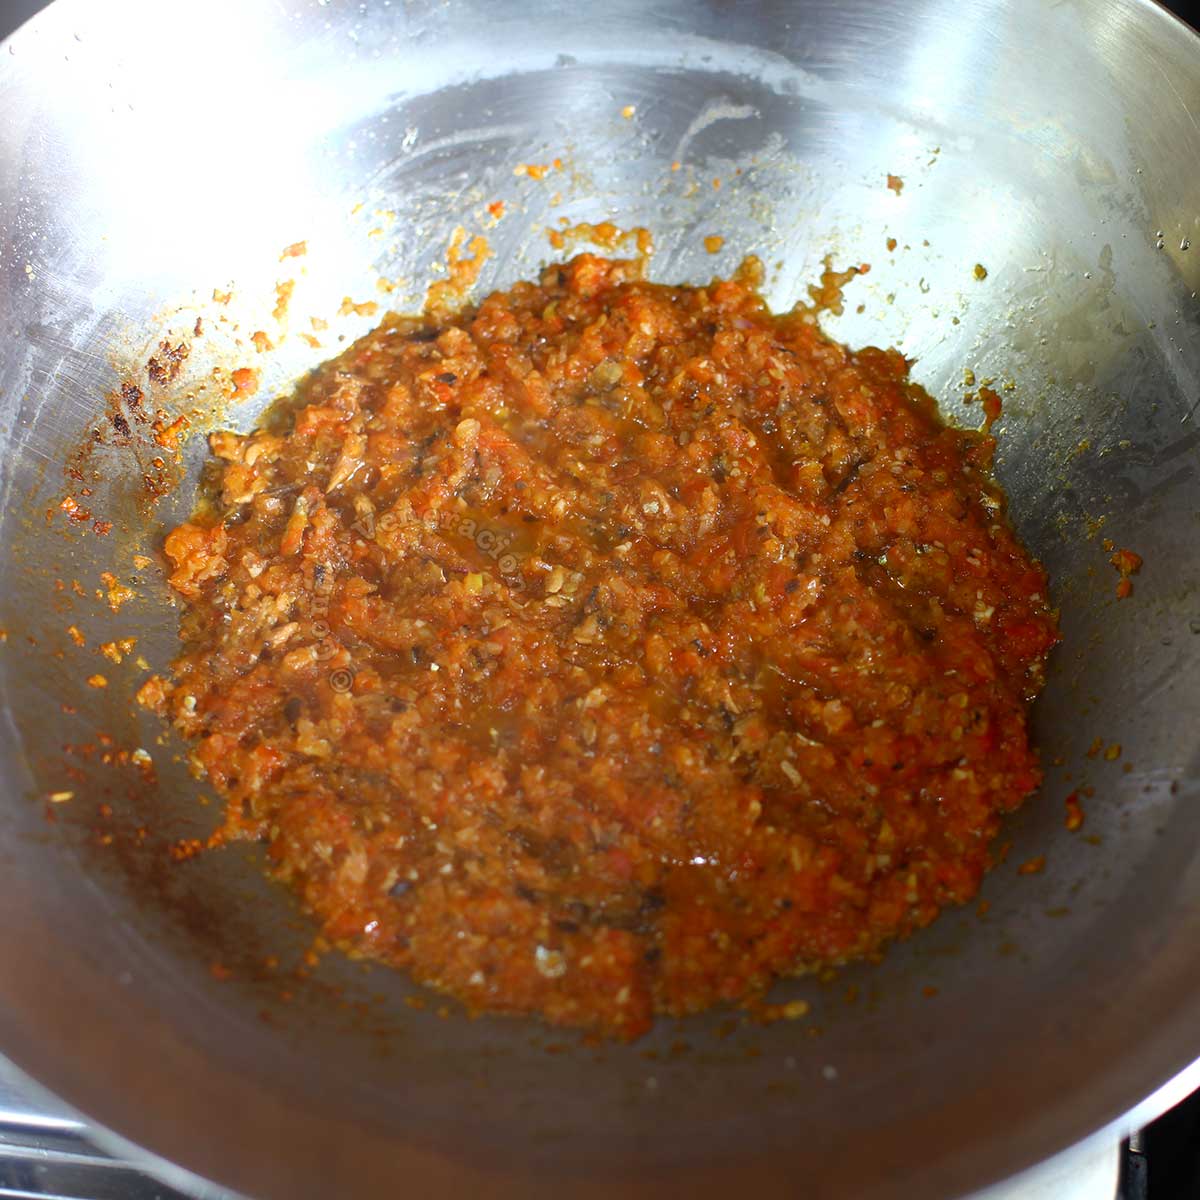 Sardines in brandied tomato sauce